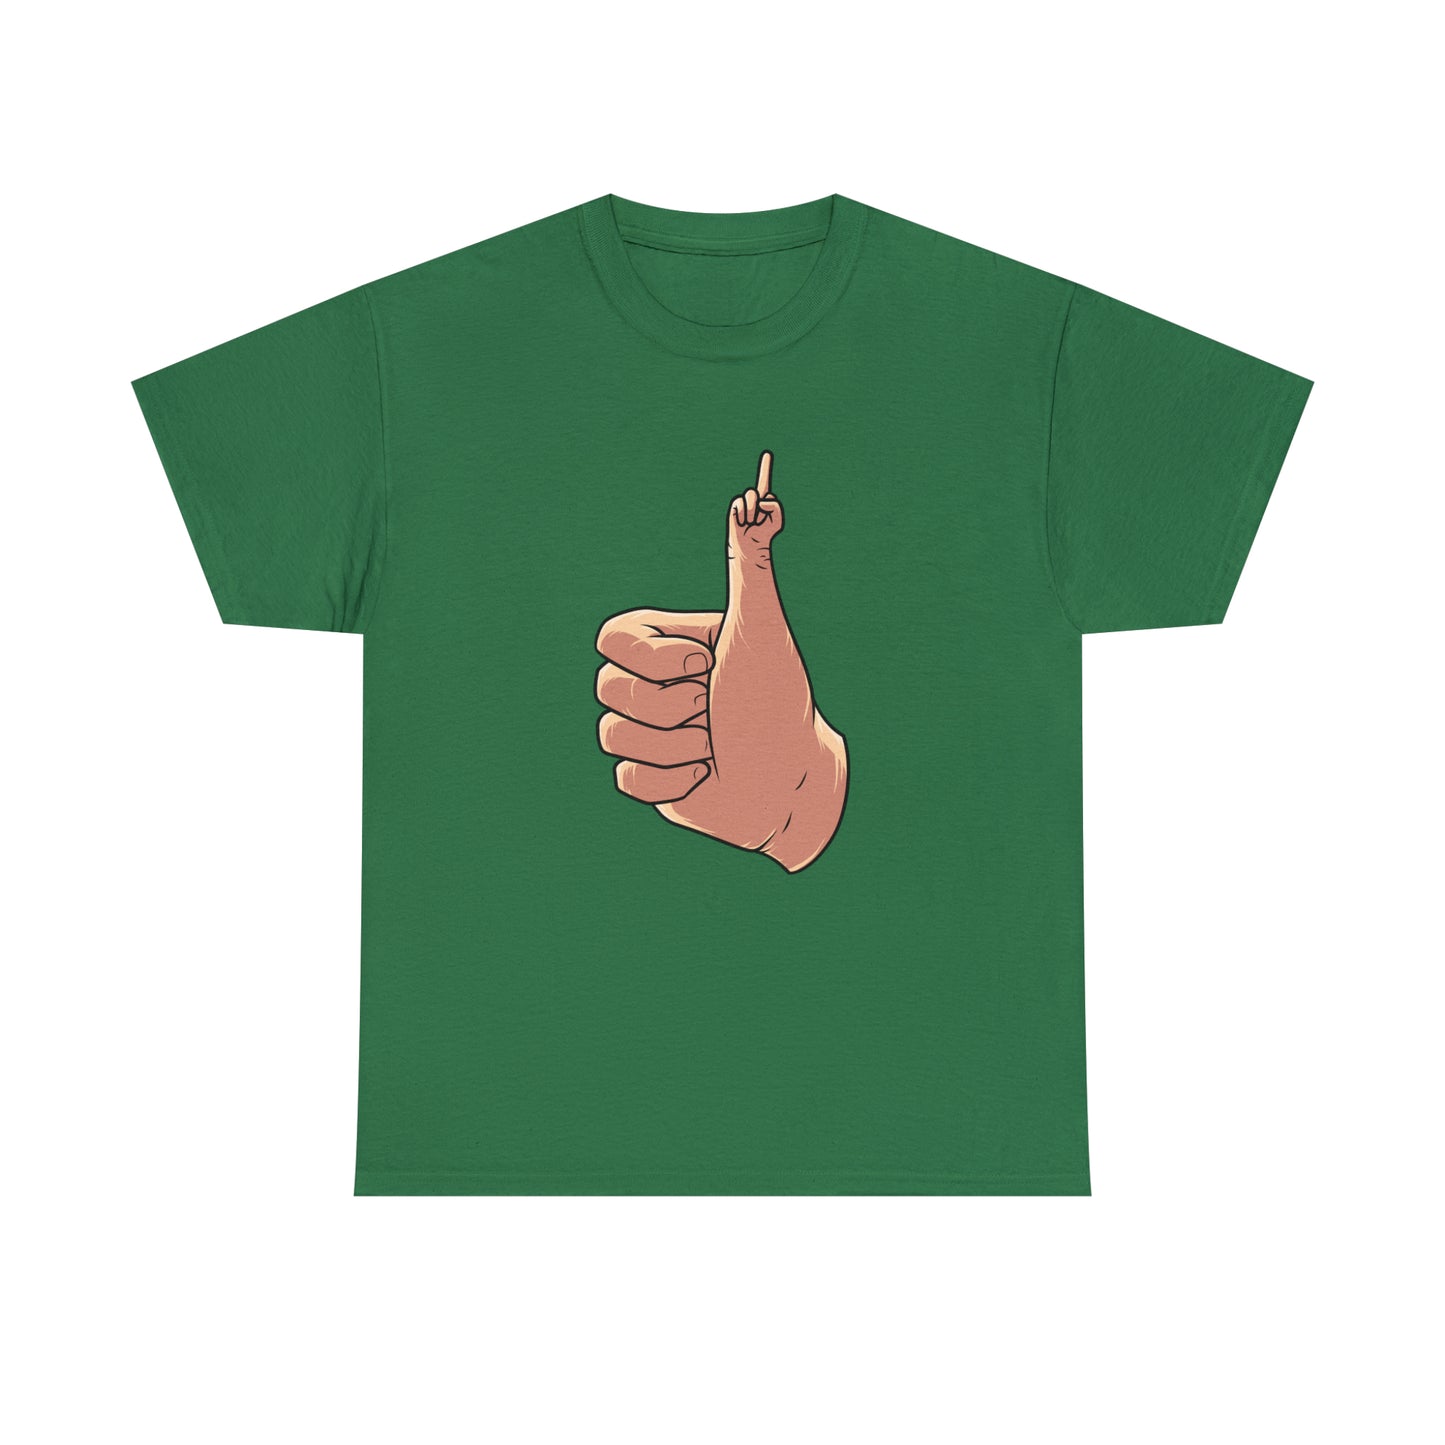 Custom Parody T-shirt, Thumbs up design